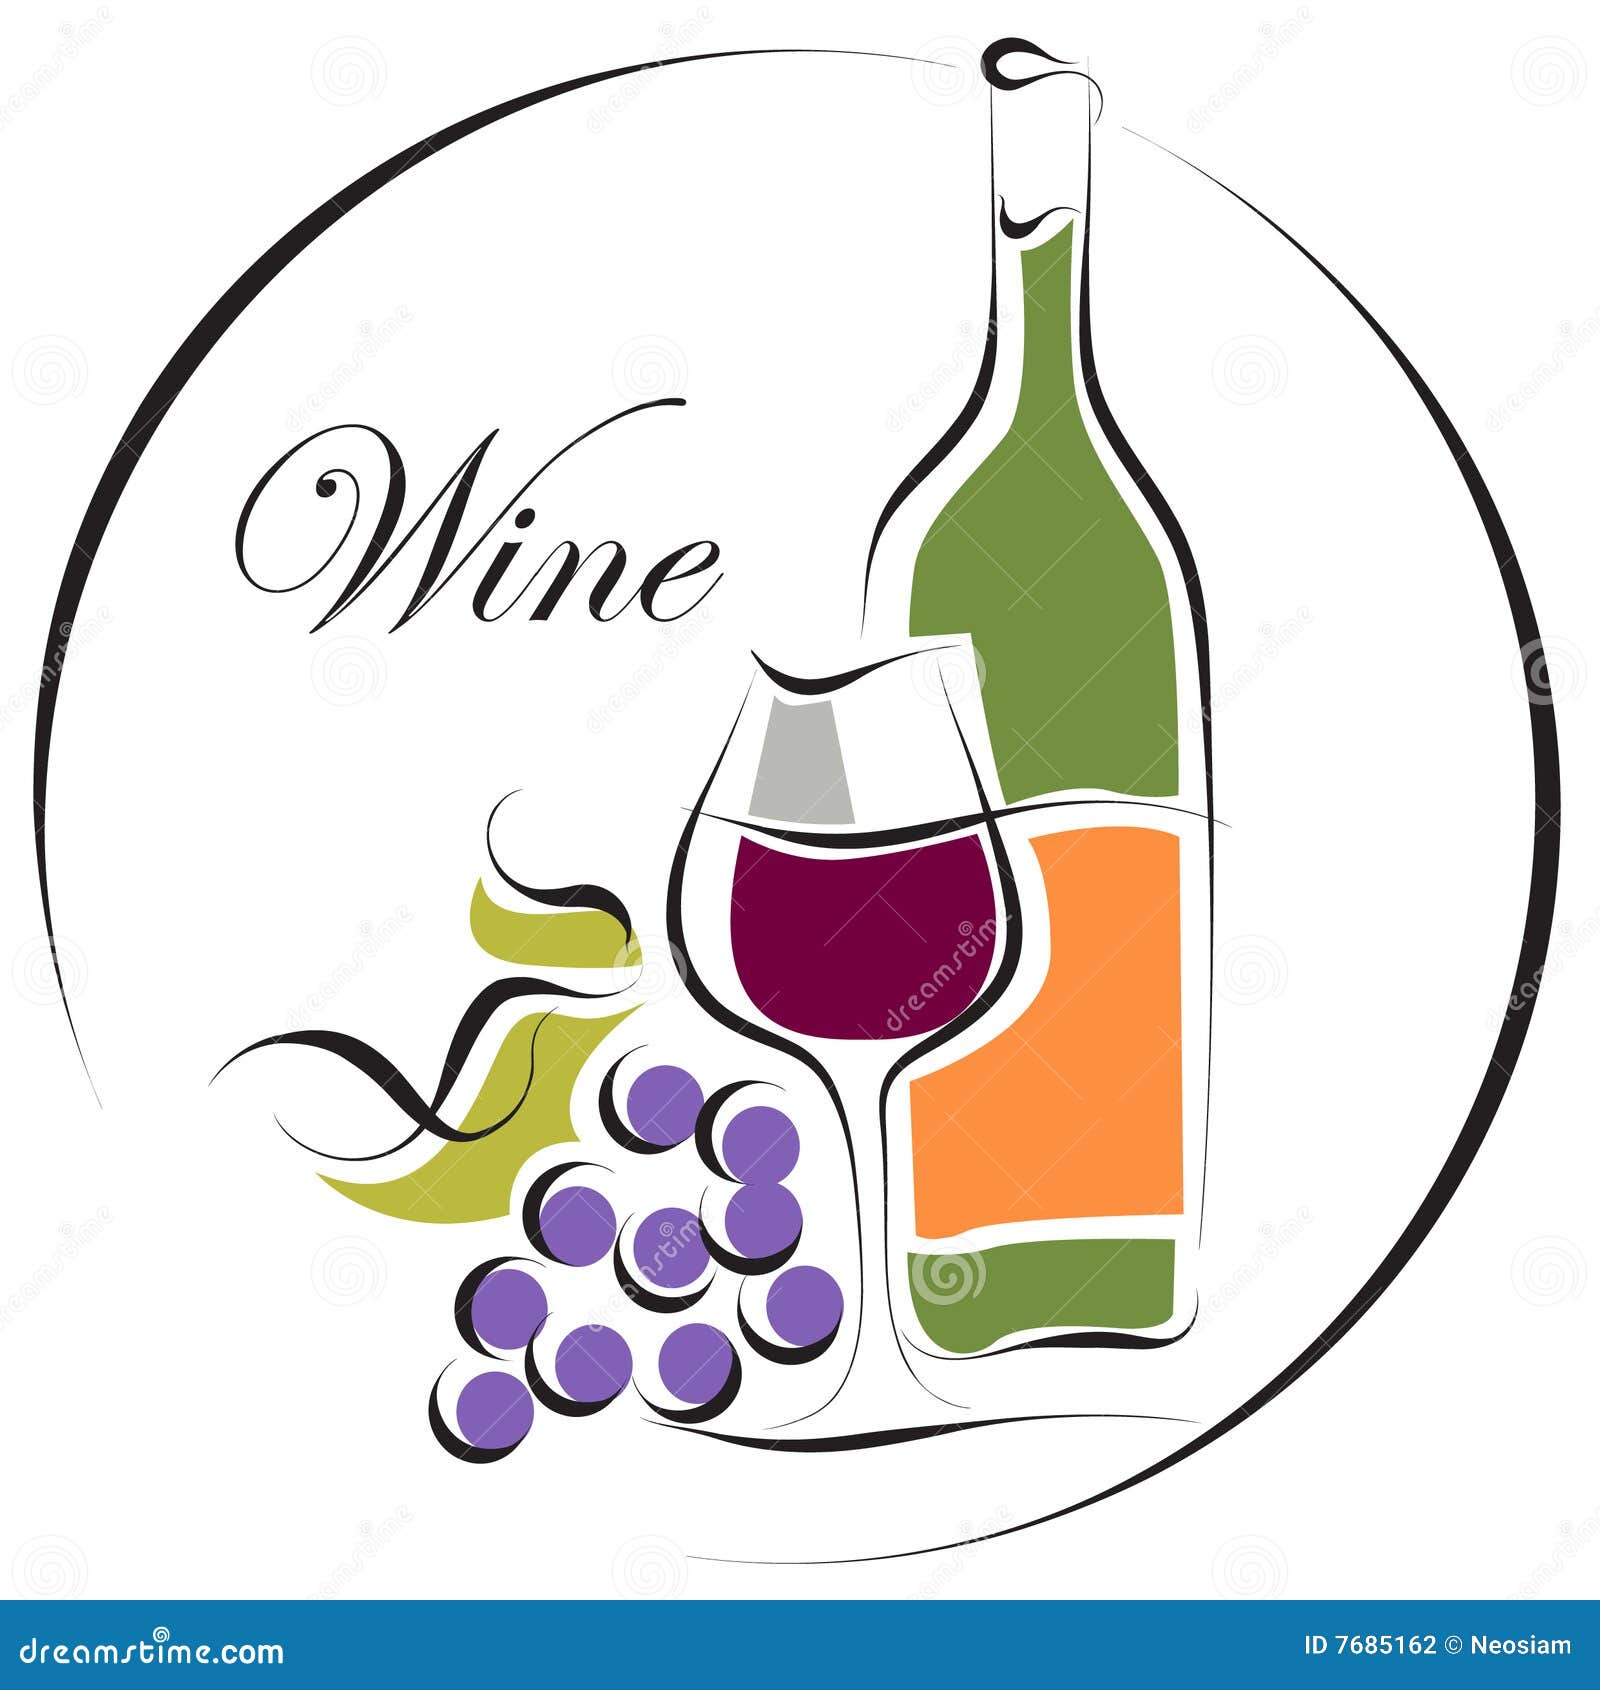 wine logo 